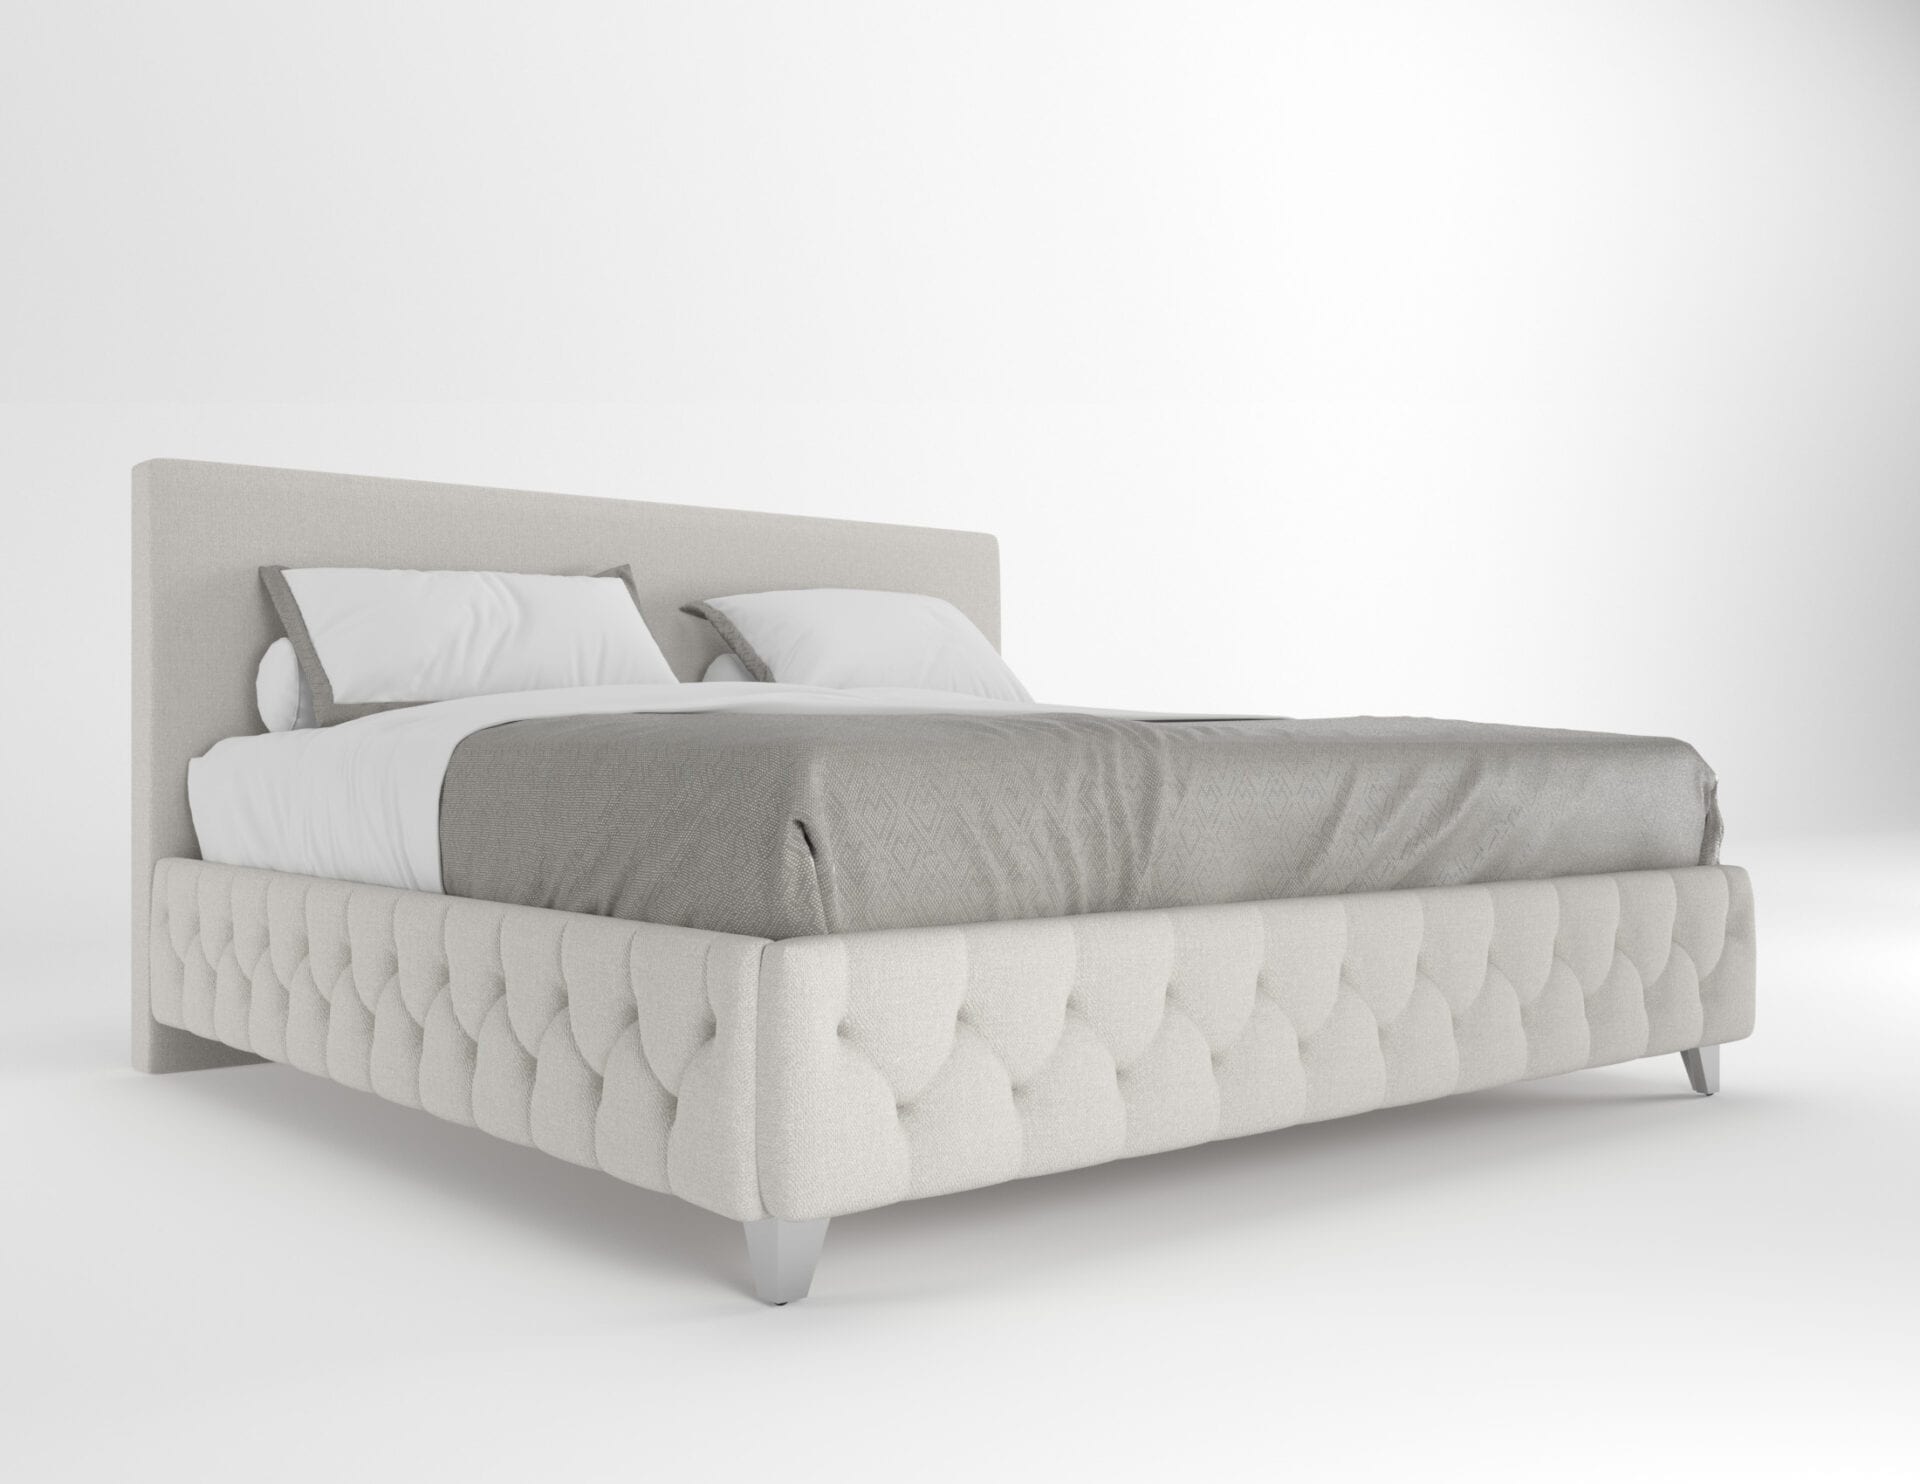 Custom built furniture including custom bedroom furniture - custom upholstered headboard | Blend Home Furnishings